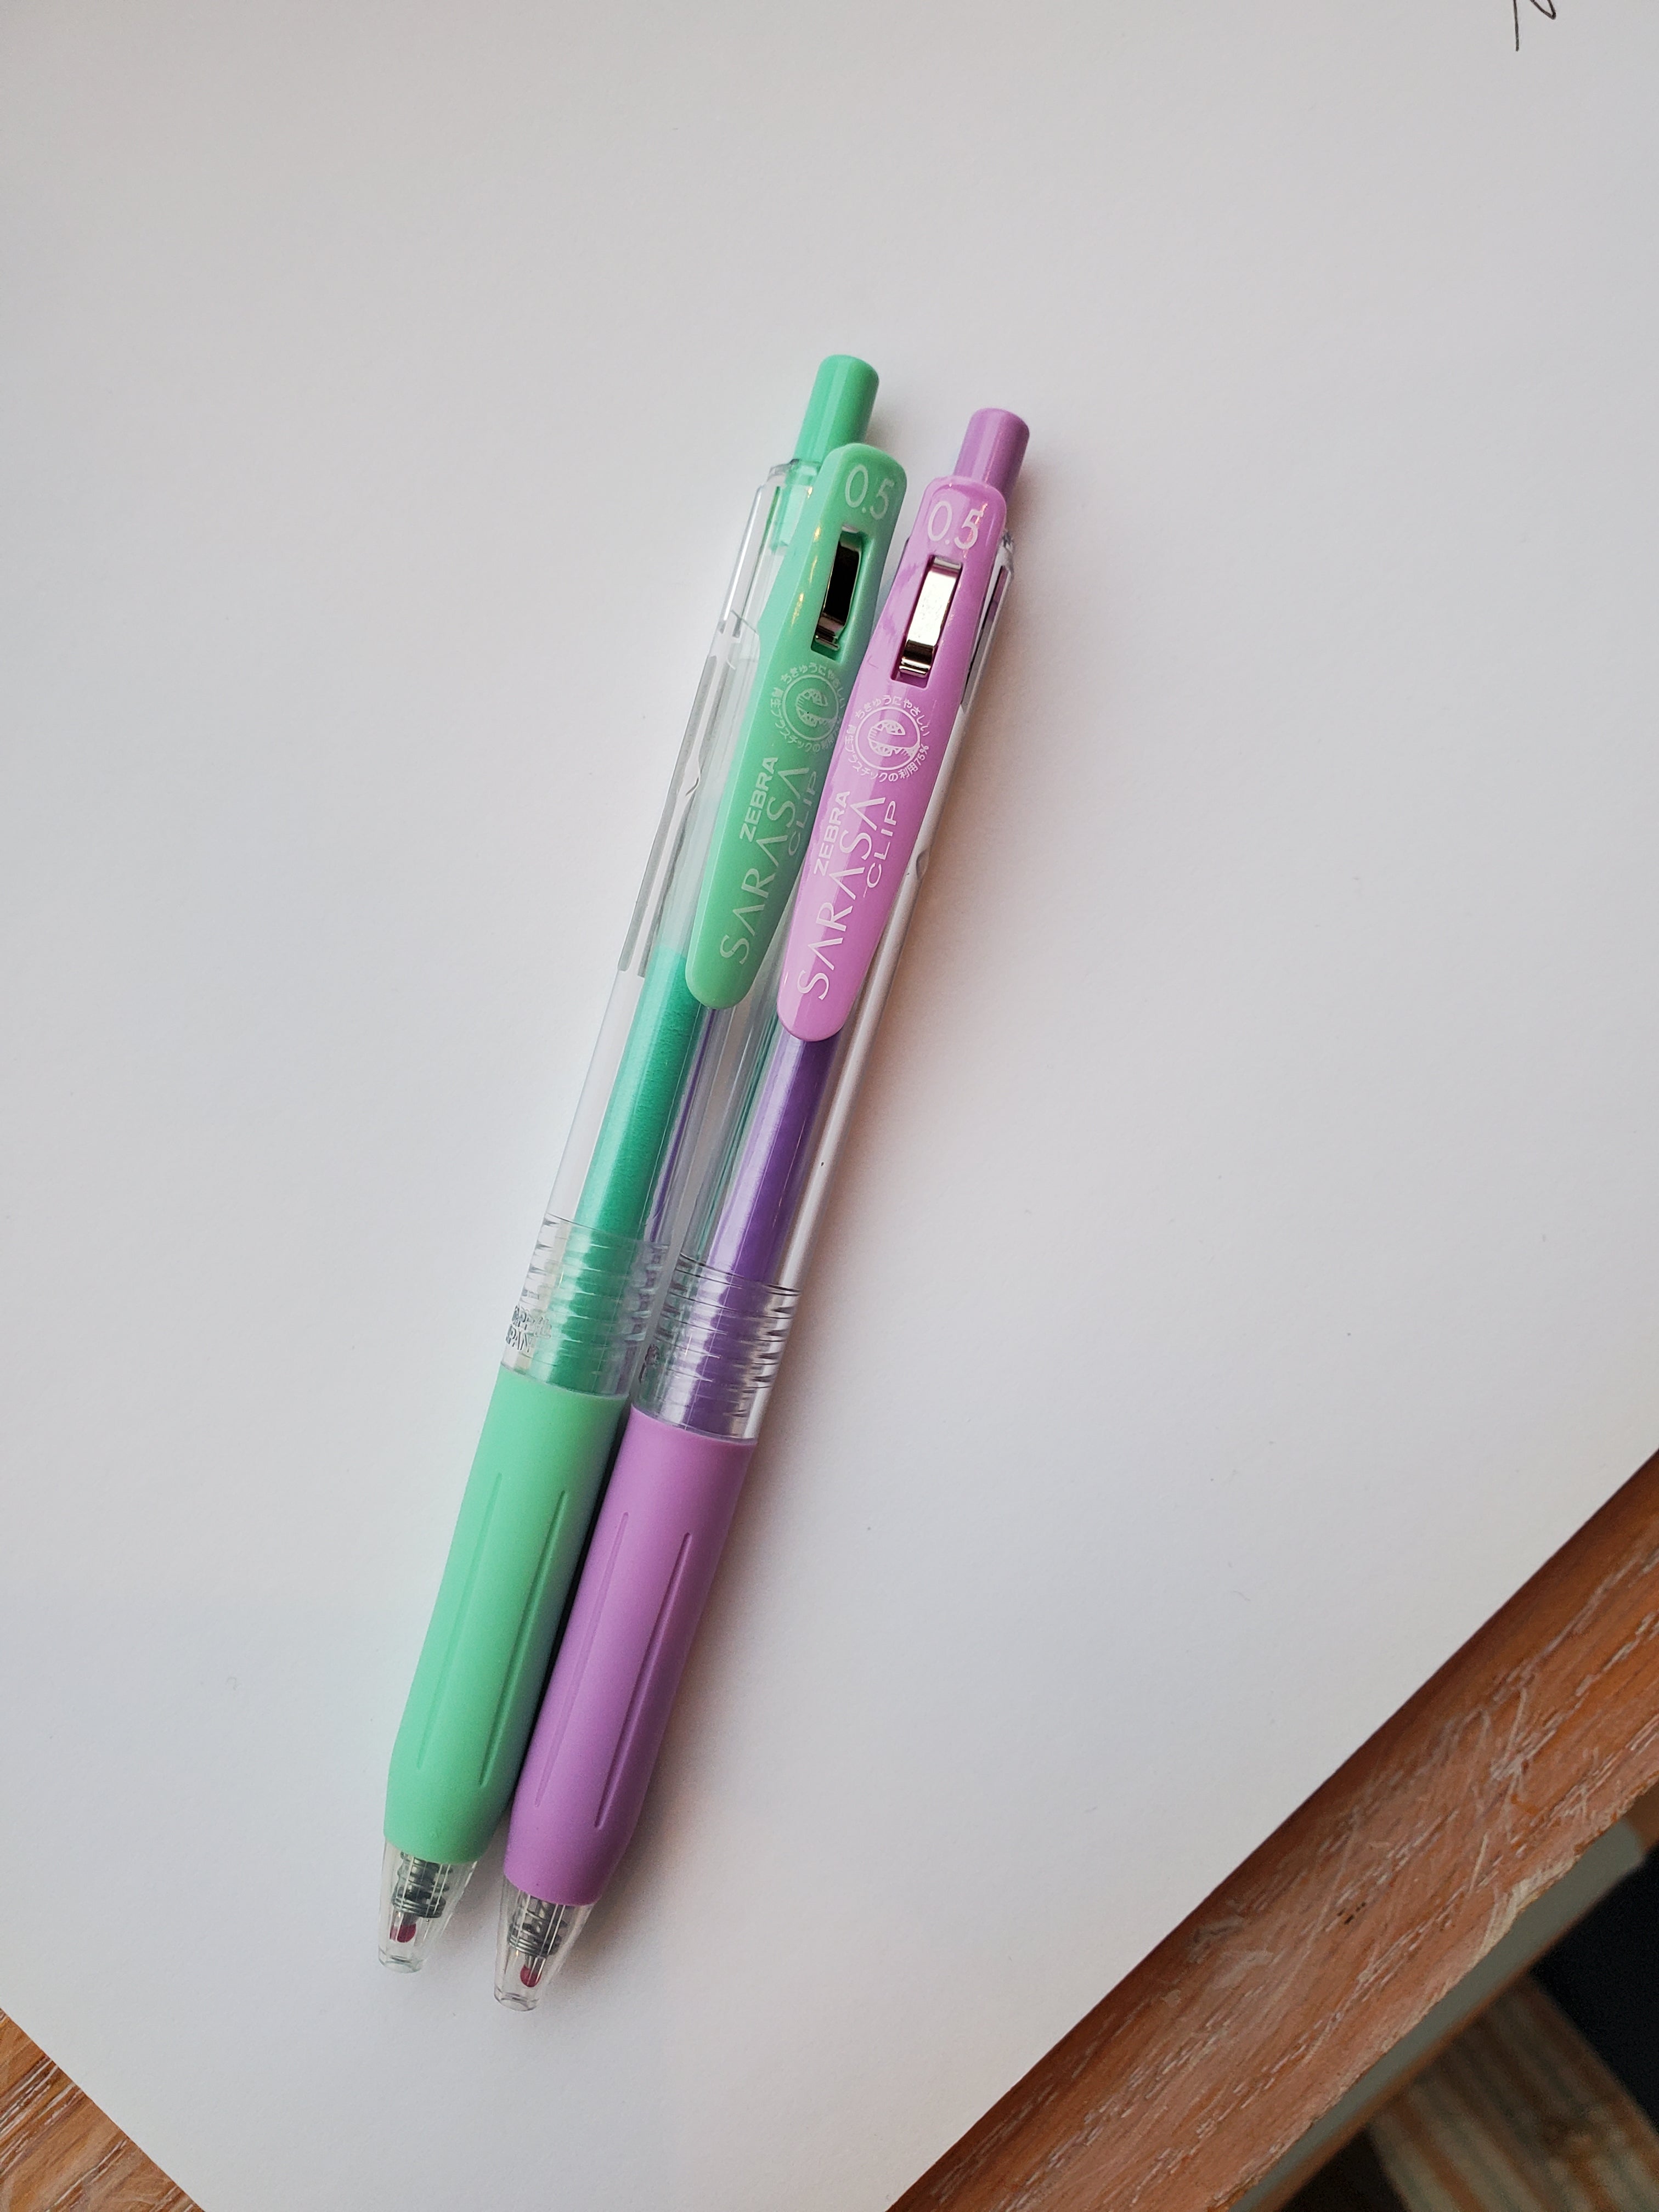 Zebra Sarasa Clip Gel Pen - 0.5 mm - Milk Purple